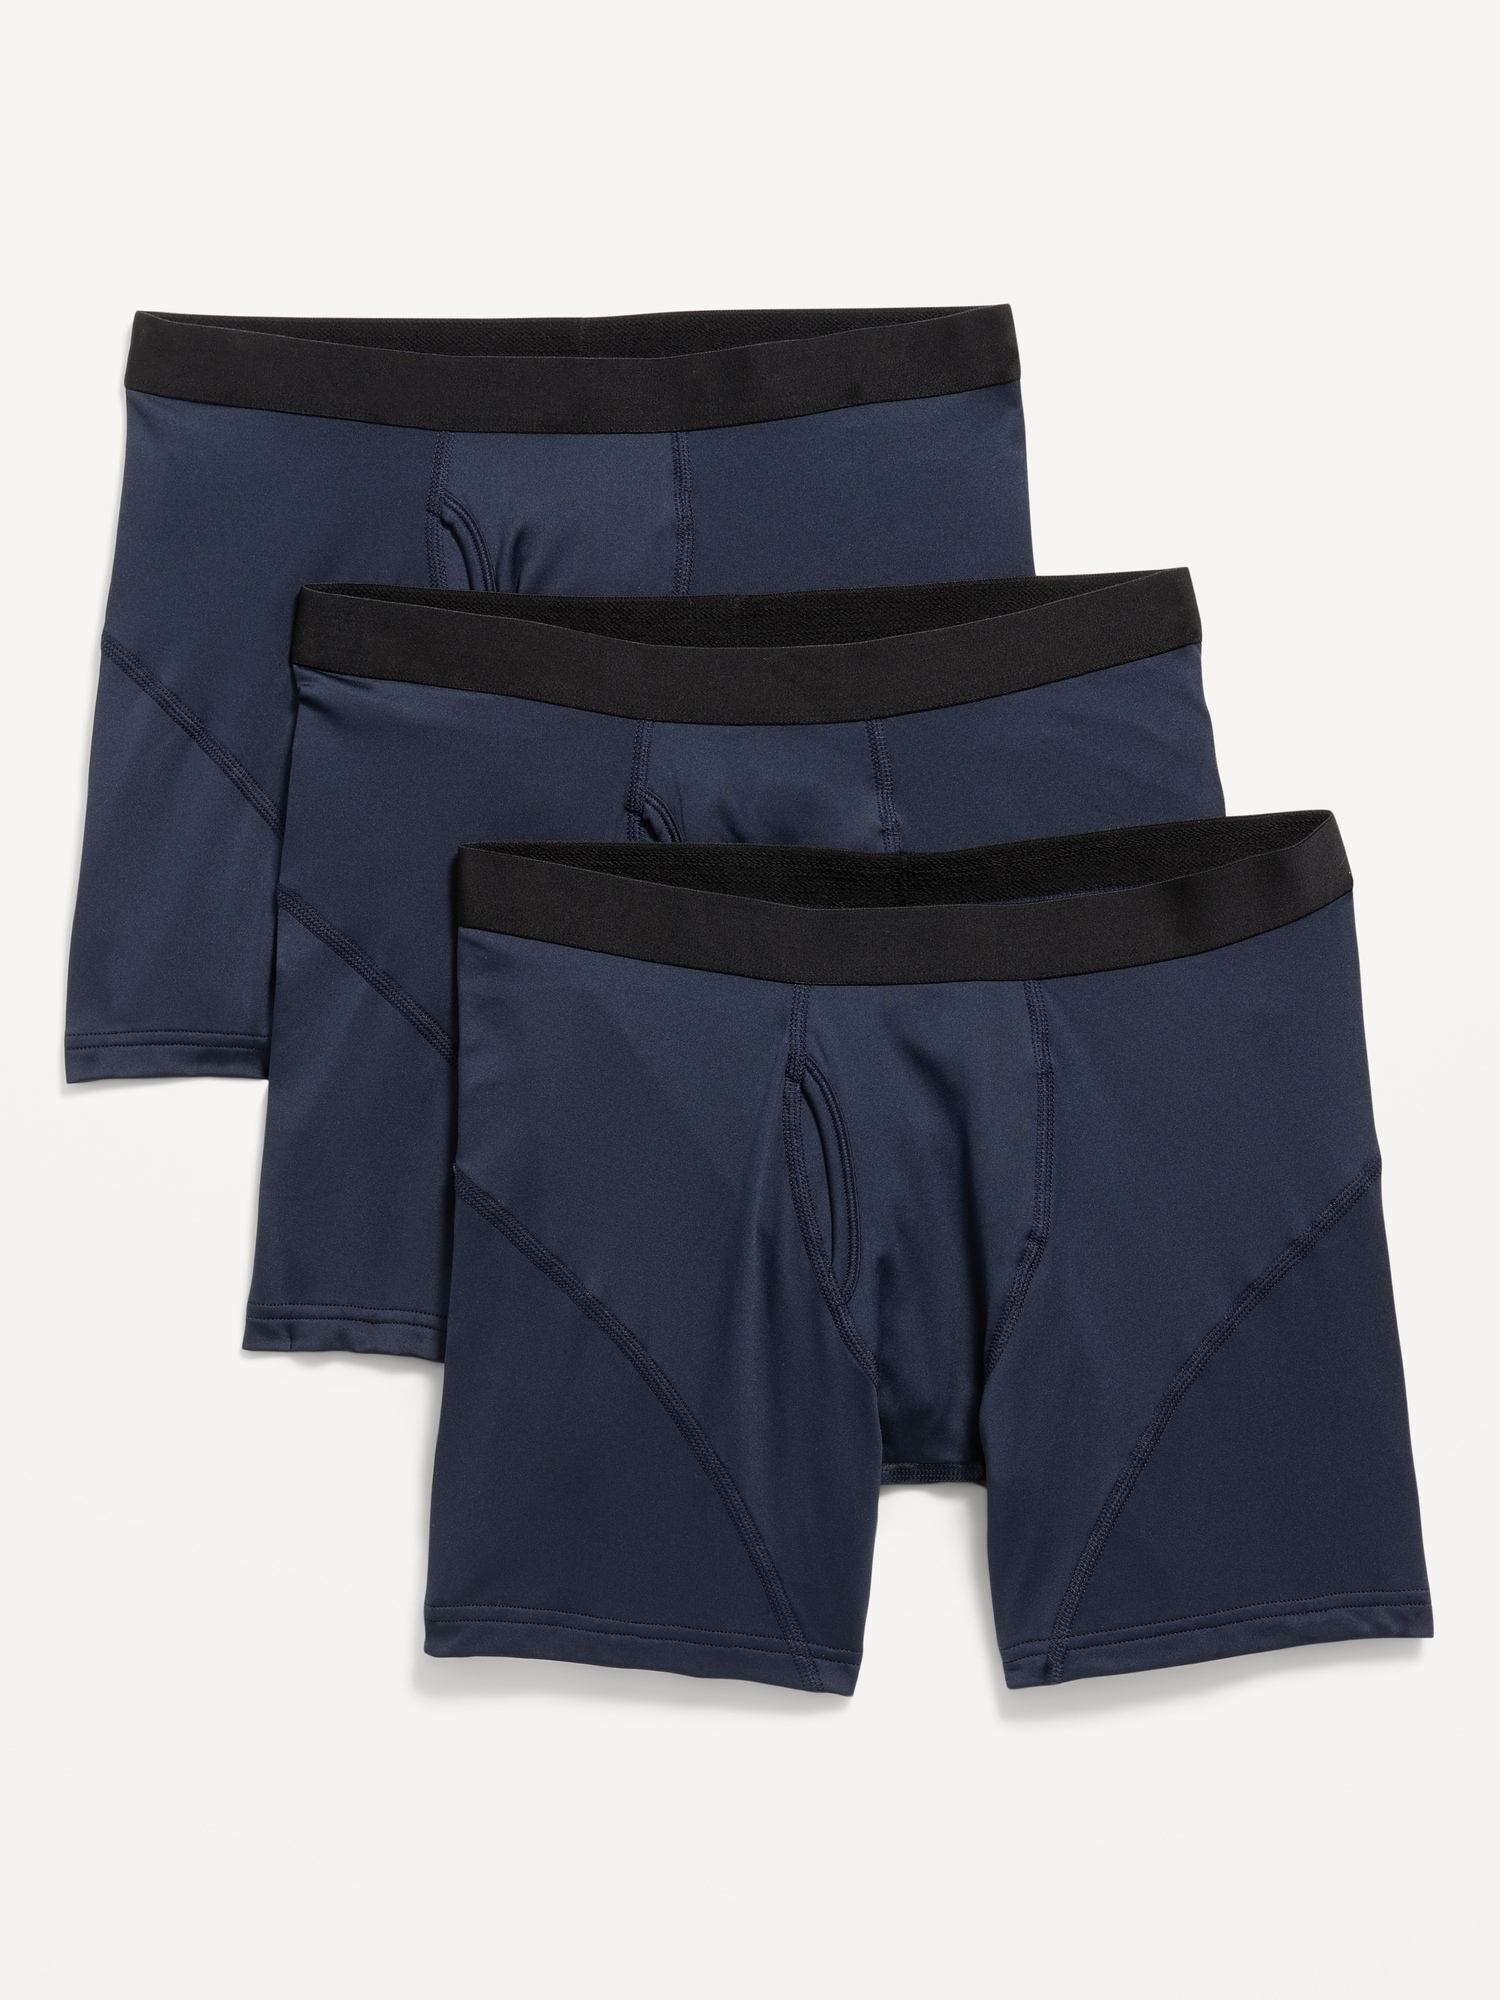 Old Navy Go-Dry Cool Performance Boxer-Briefs Underwear 3-Pack -- 5-inch inseam blue. 1